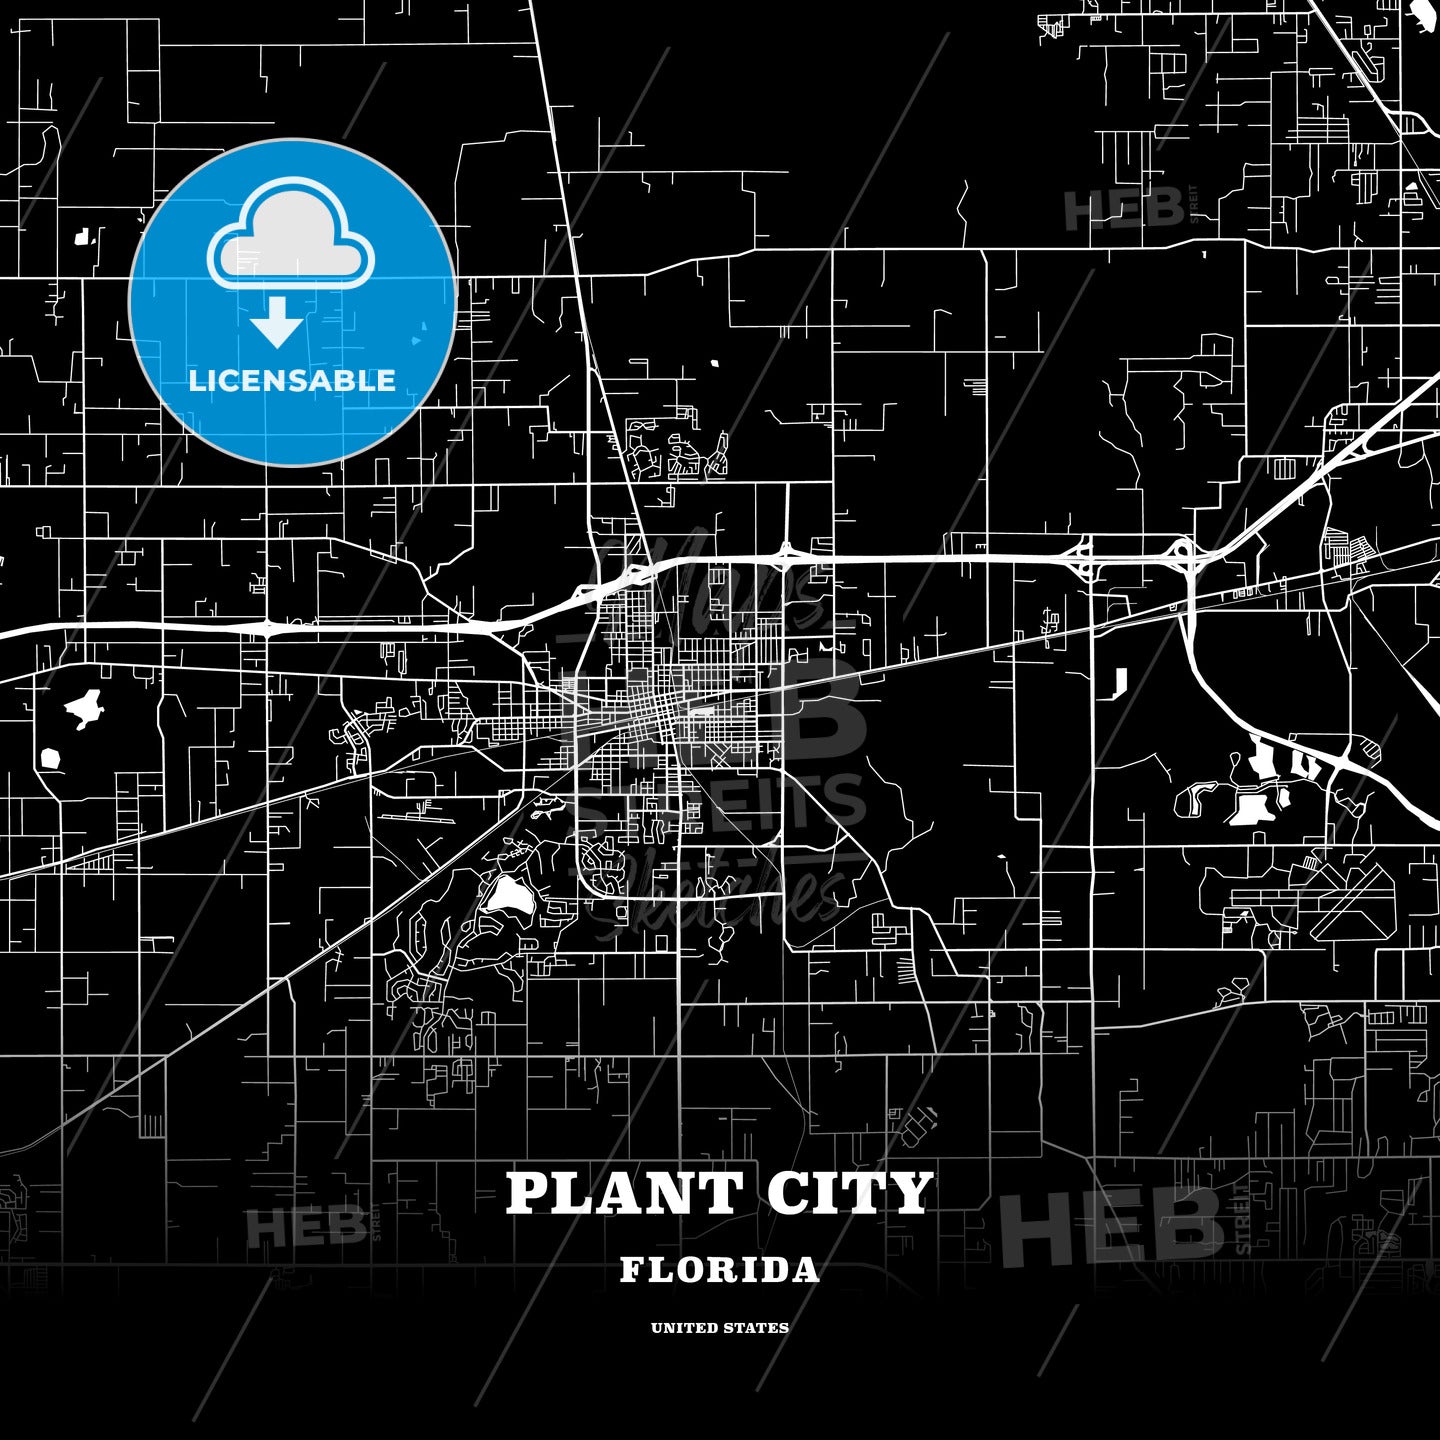 Plant City, Florida, USA map